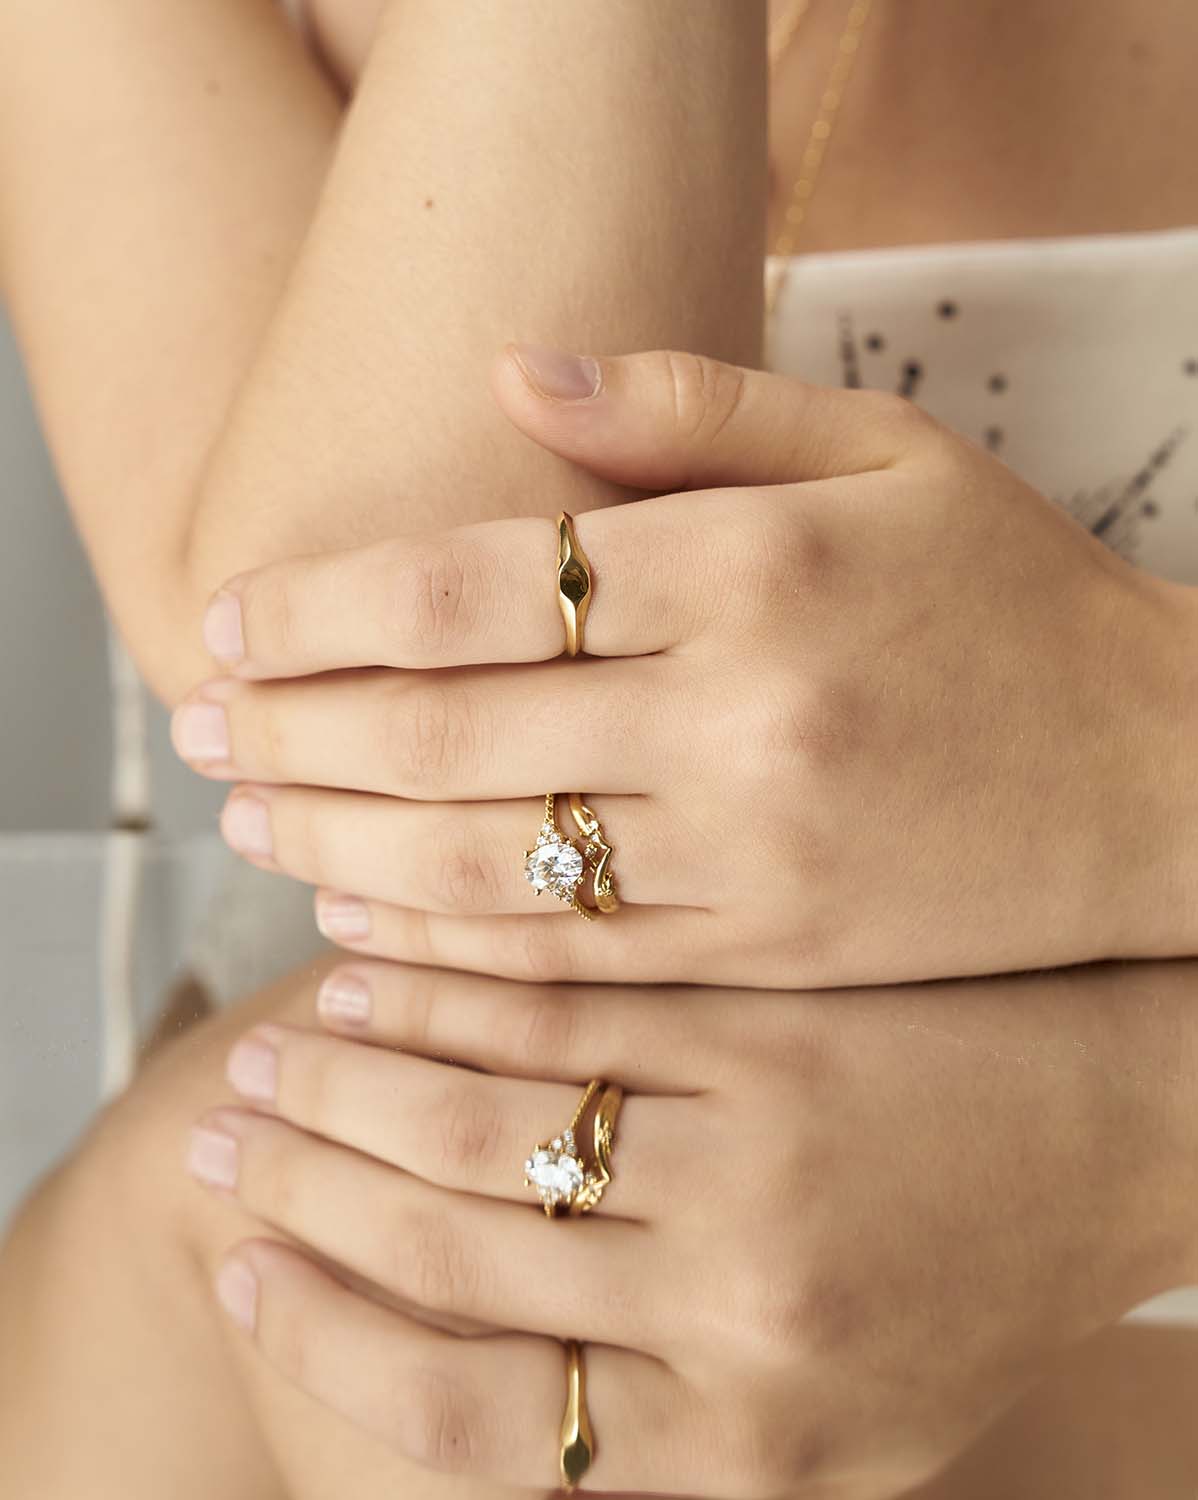 White Gold Lovelace Wishbone Ring